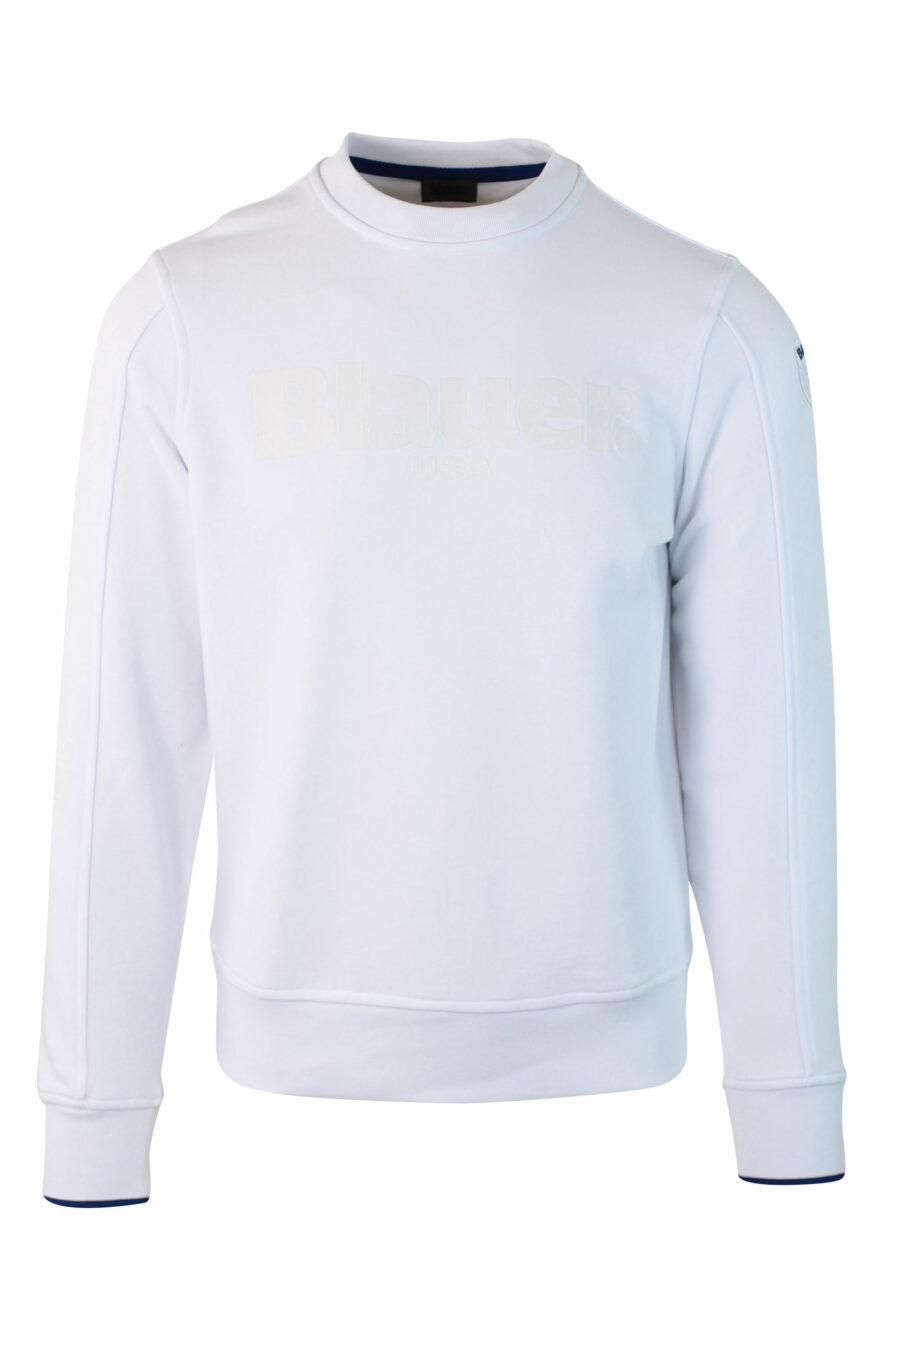 Sweatshirt branca com maxilogue de veludo monocromático - IMG 9843 1